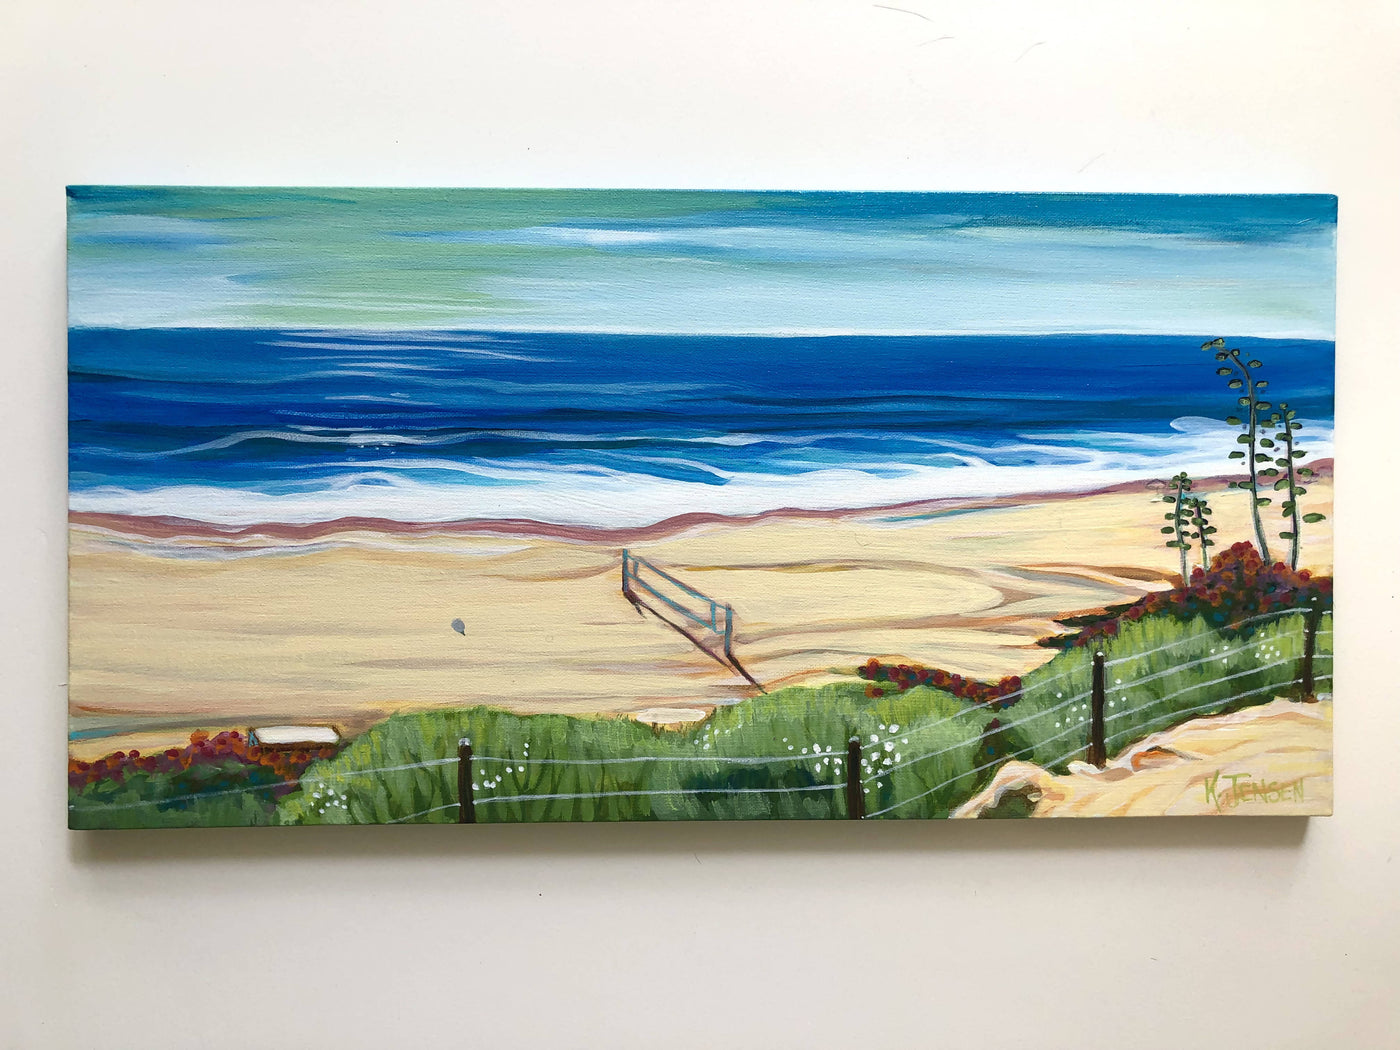 "Carlsbad Beach" by K. Jensen